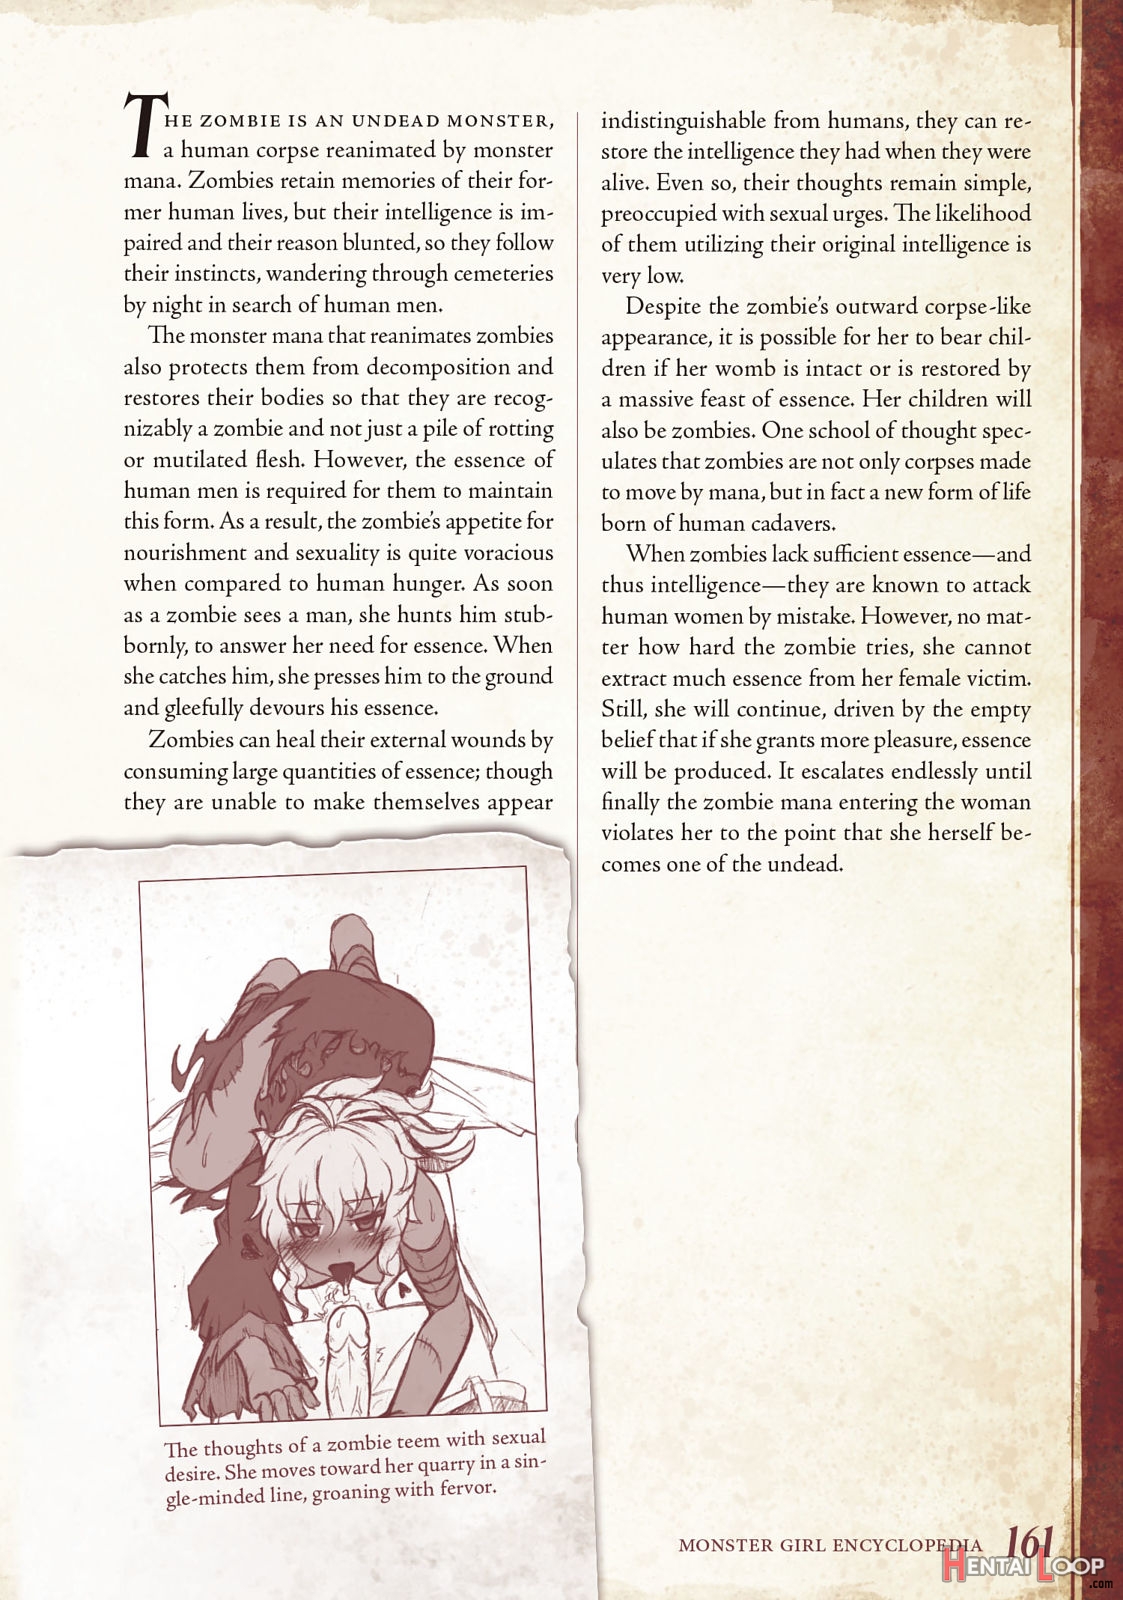 Monster Girl Encyclopedia Vol. 1 page 162